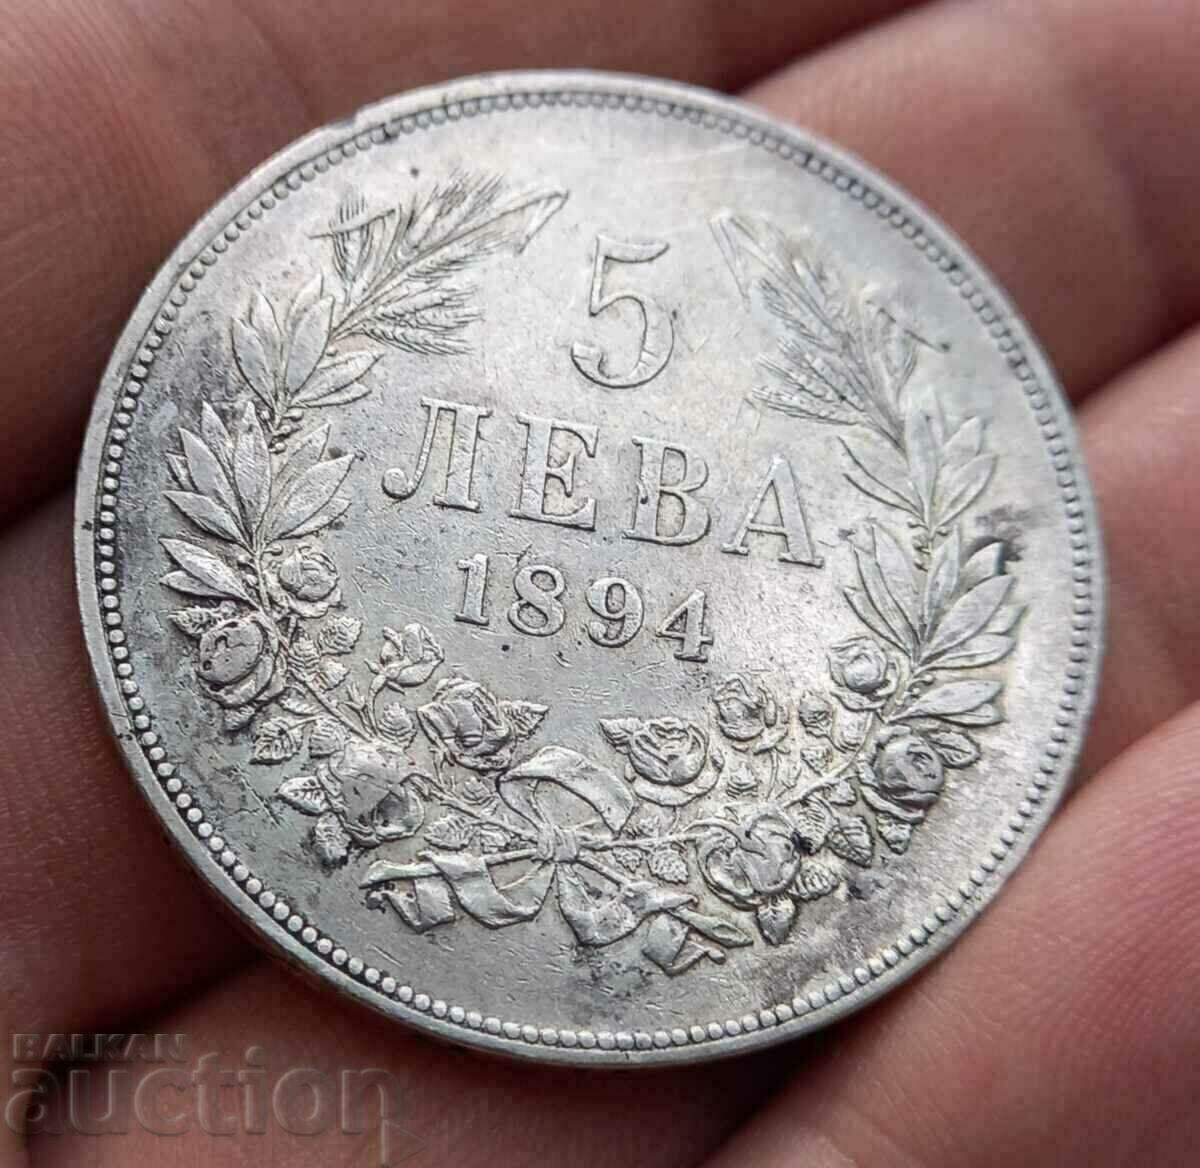 Monedă de argint de 5 BGN 1894